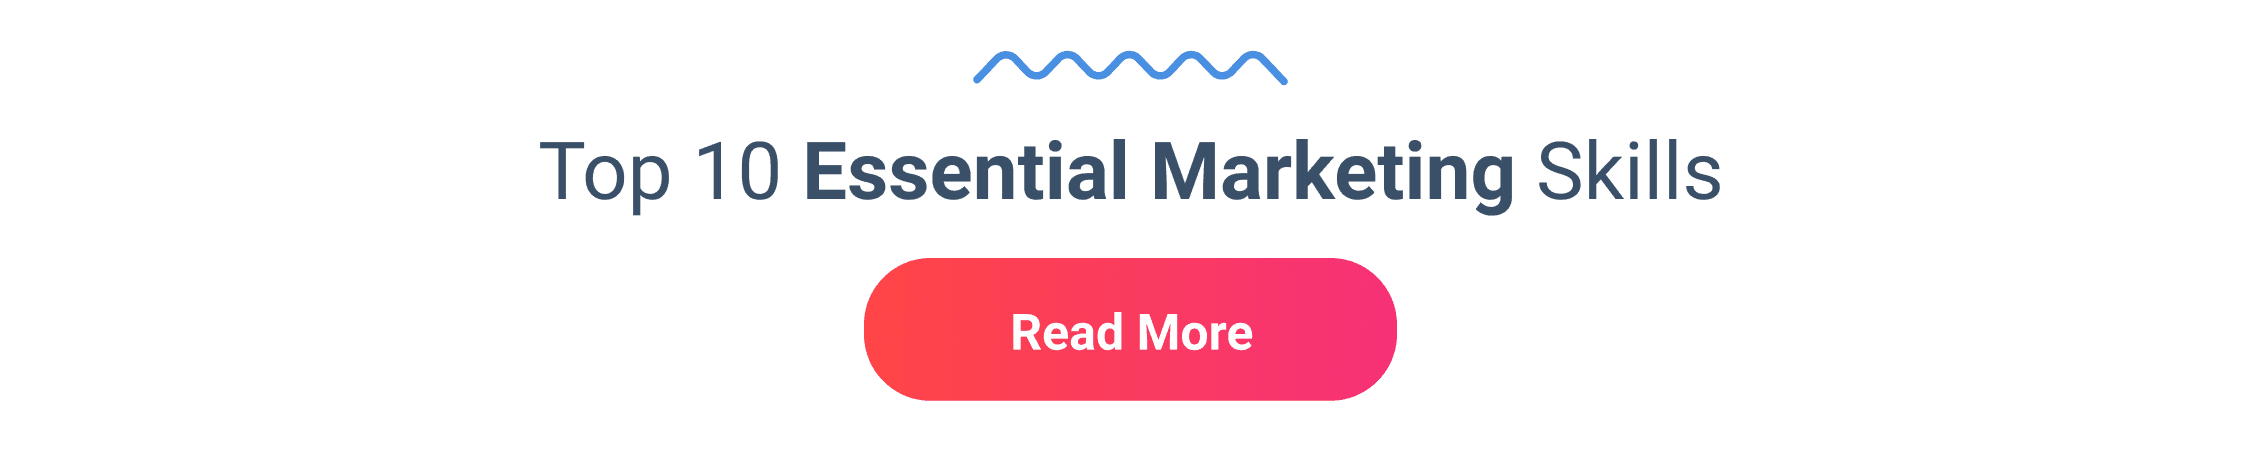 Top 10 essential marketing skills banner